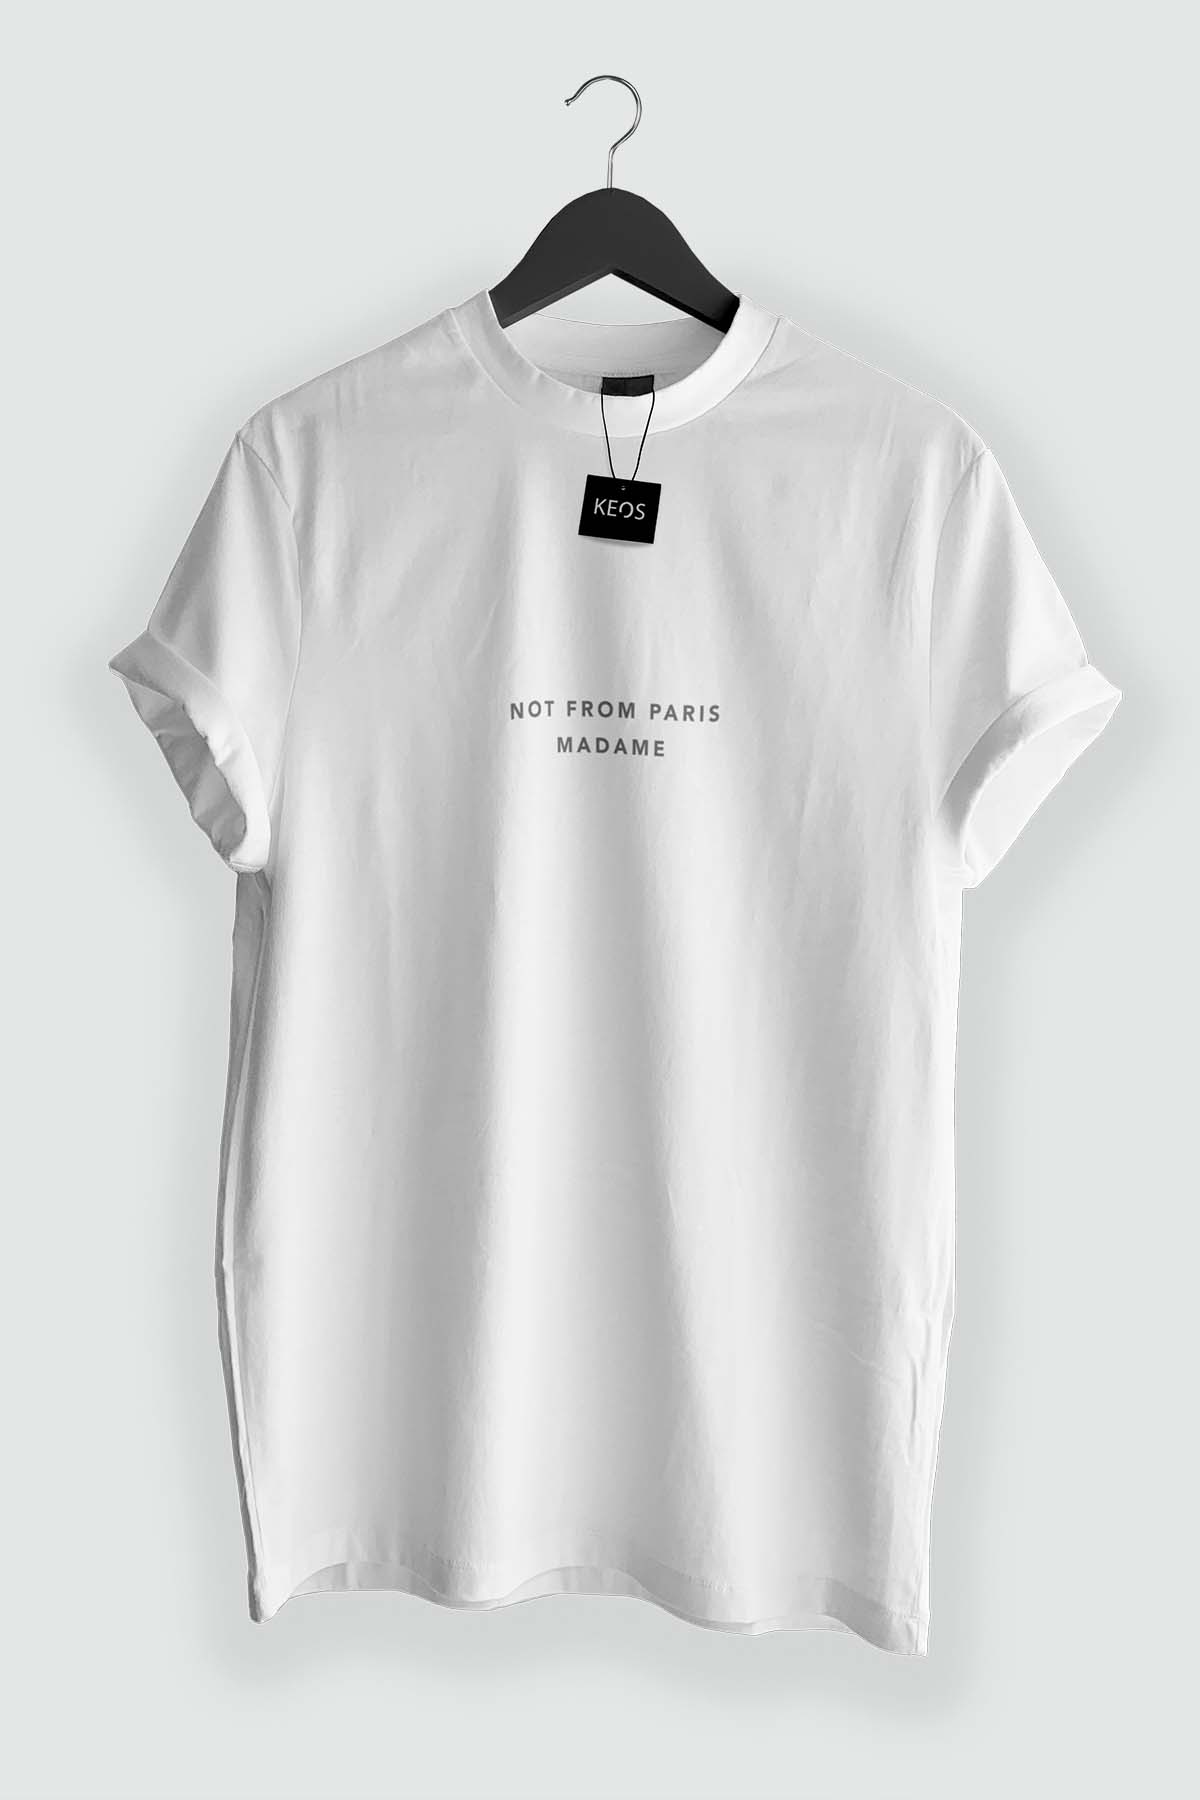 Not From Paris Organic Cotton T-shirt - keos.life